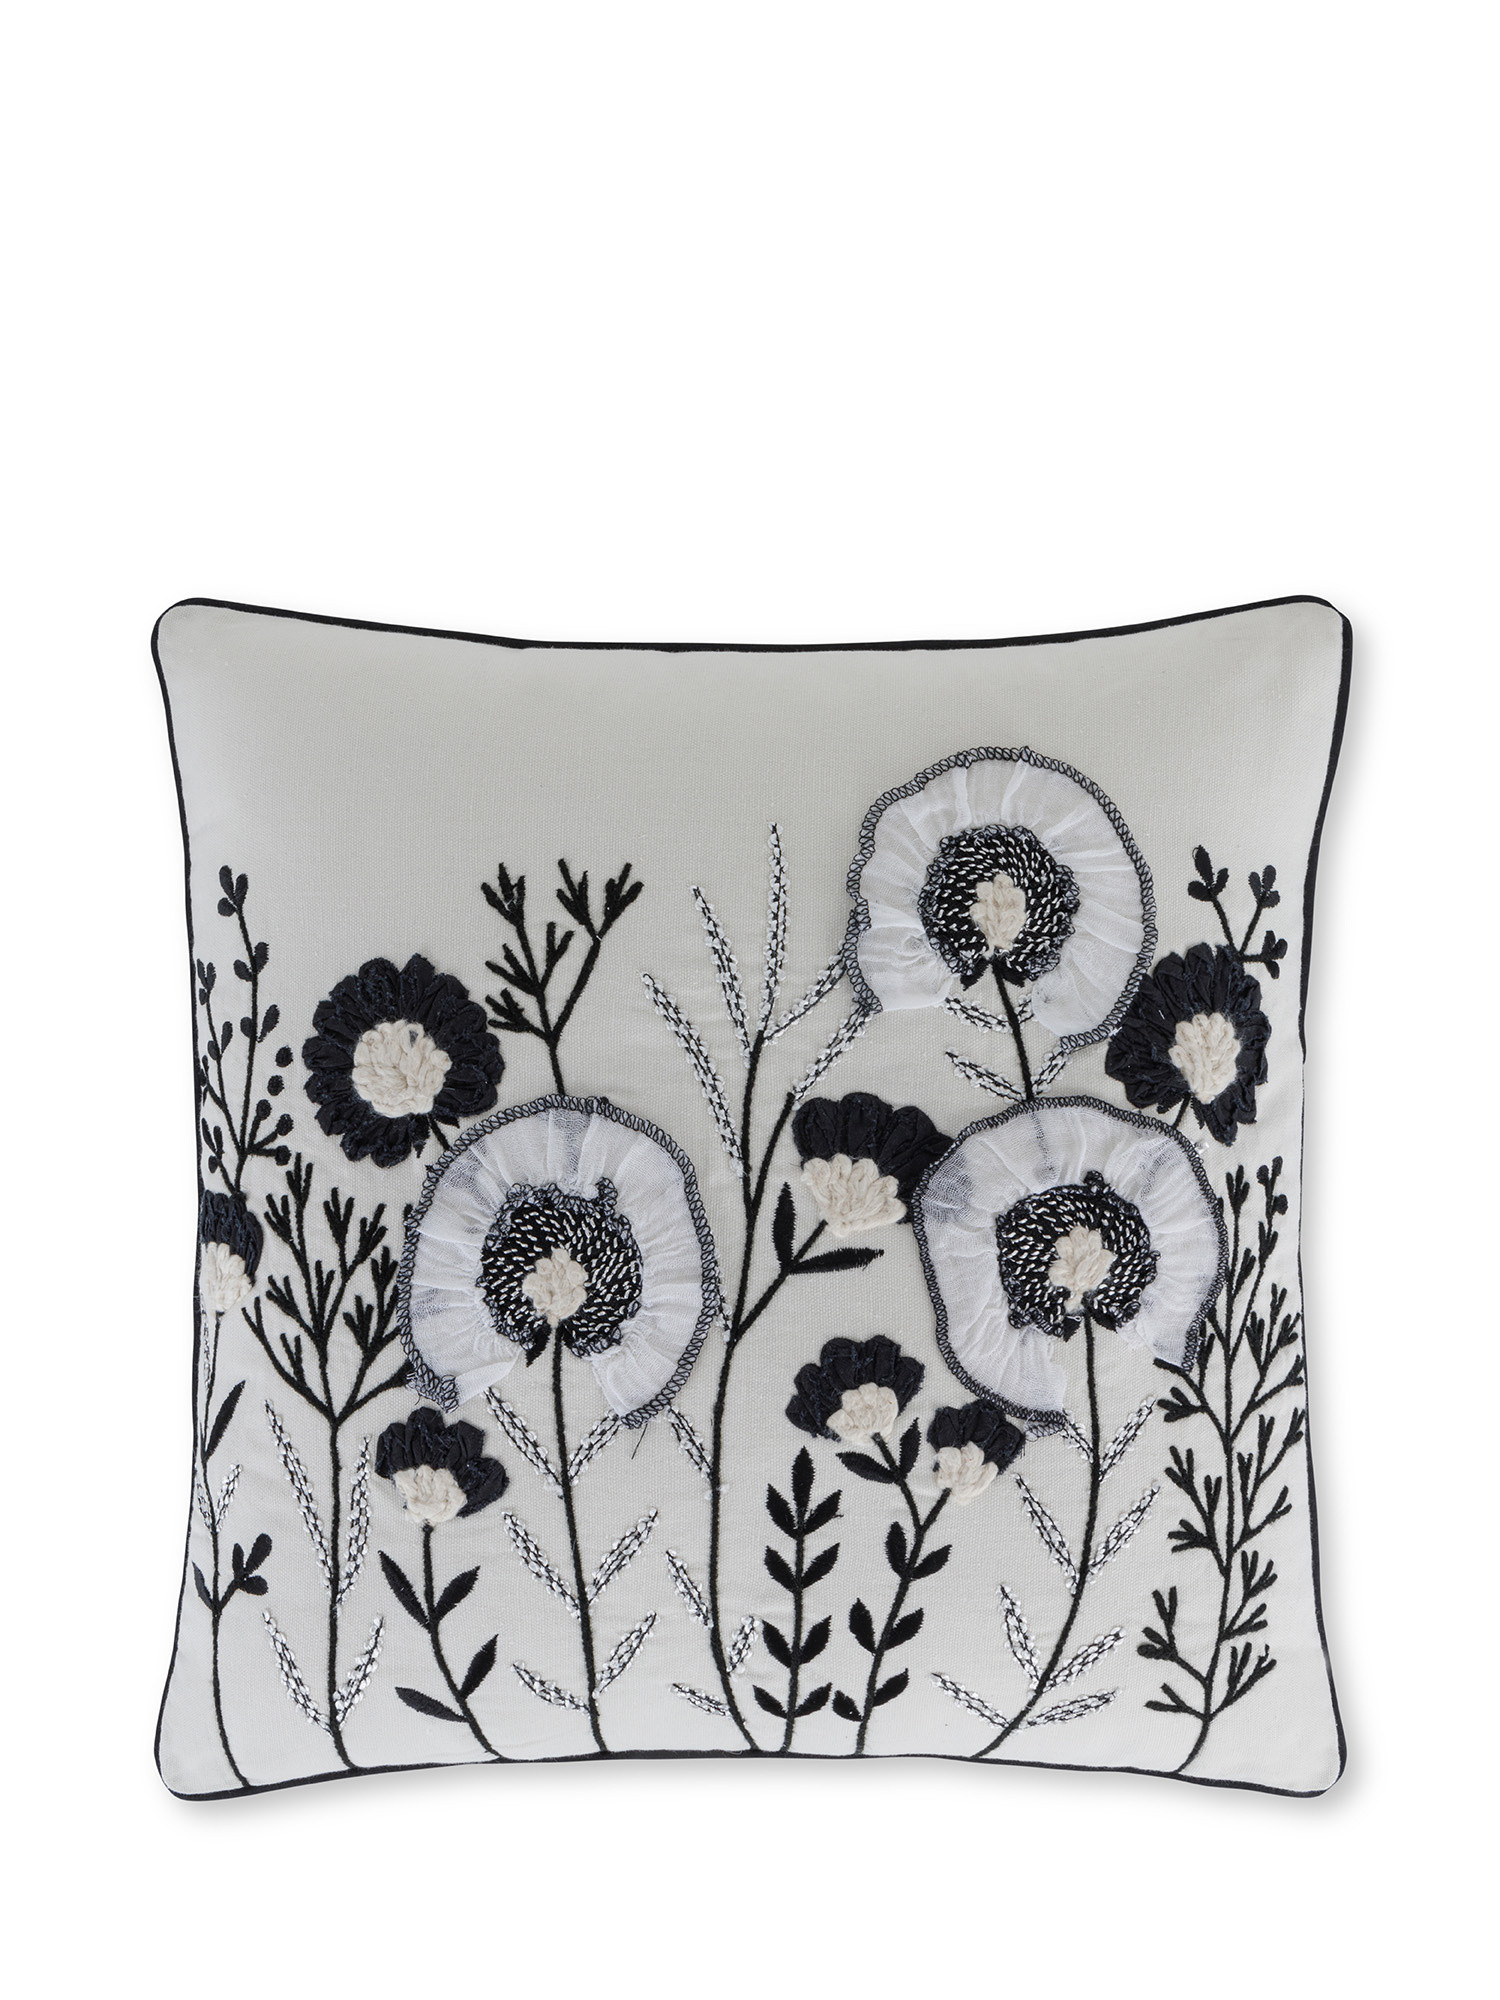 Cuscino con fiori ricamati in rilievo 45x45 cm, Bianco, large image number 0